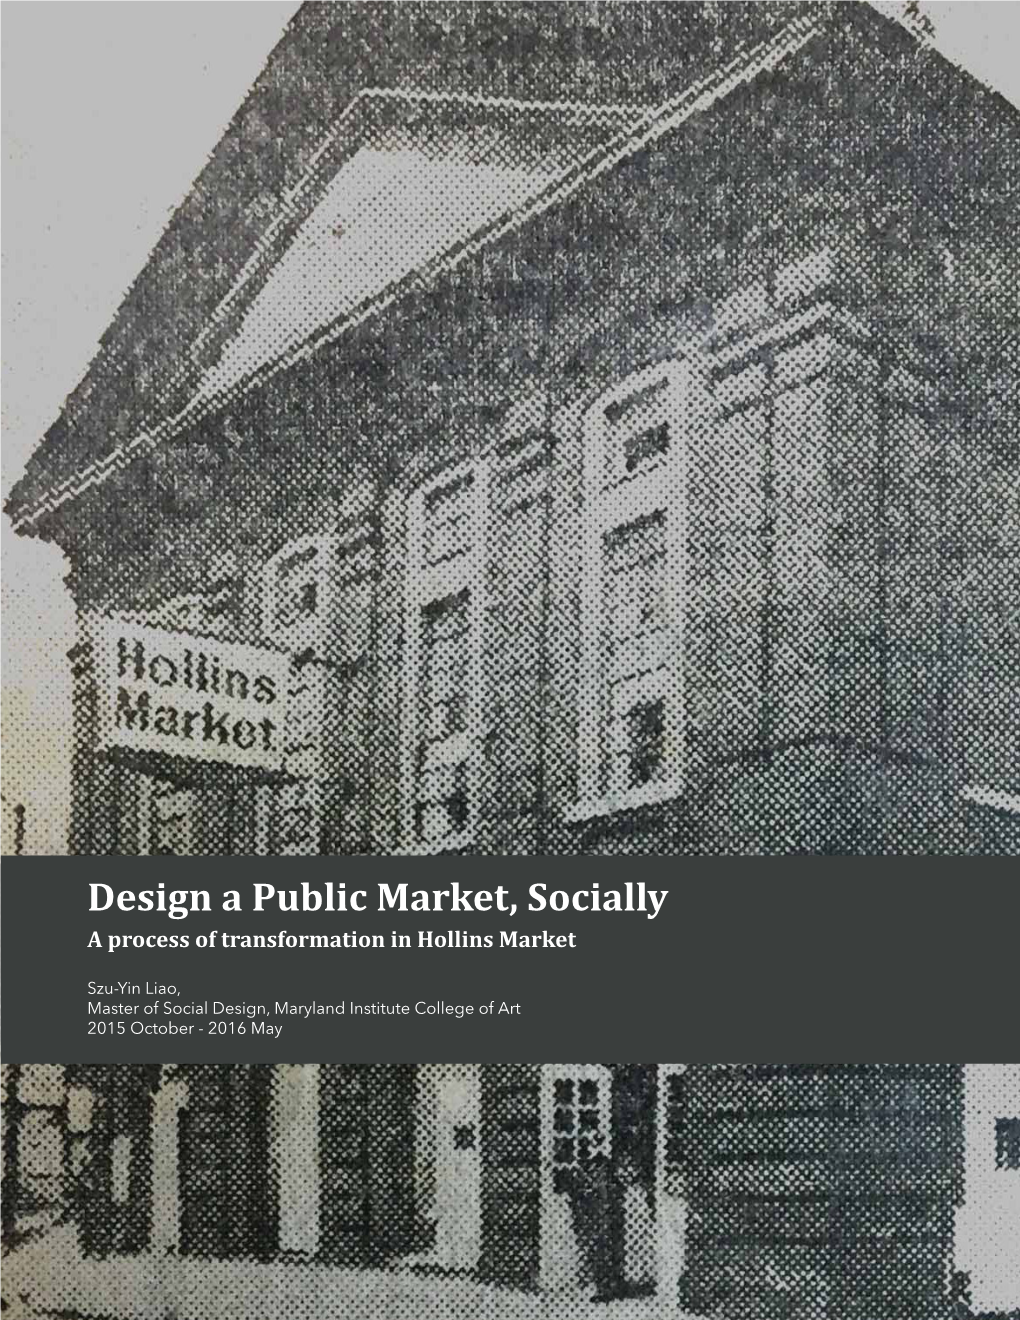 Design a Public Market, Socially a Process of Transformation in Hollins Market